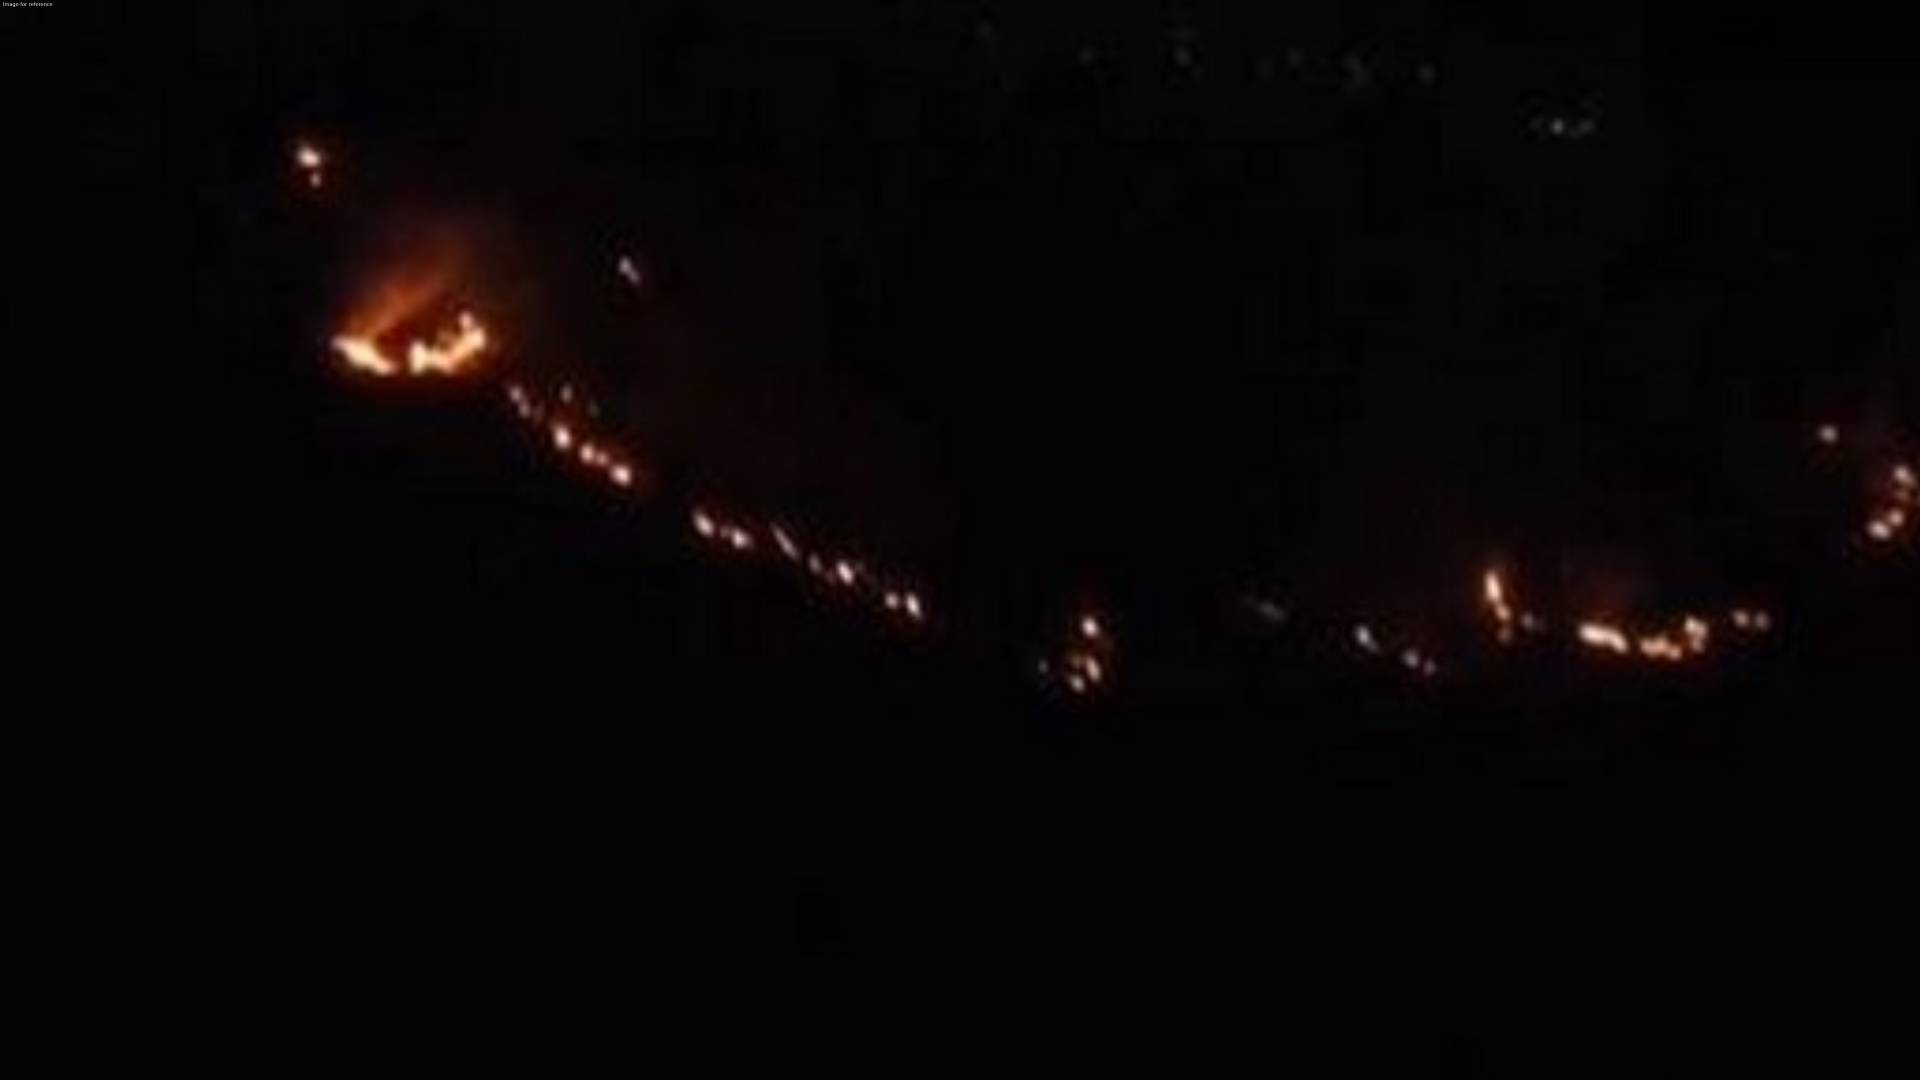 Tamil Nadu: Fire breaks out in forest of Madurai's Madakkulam